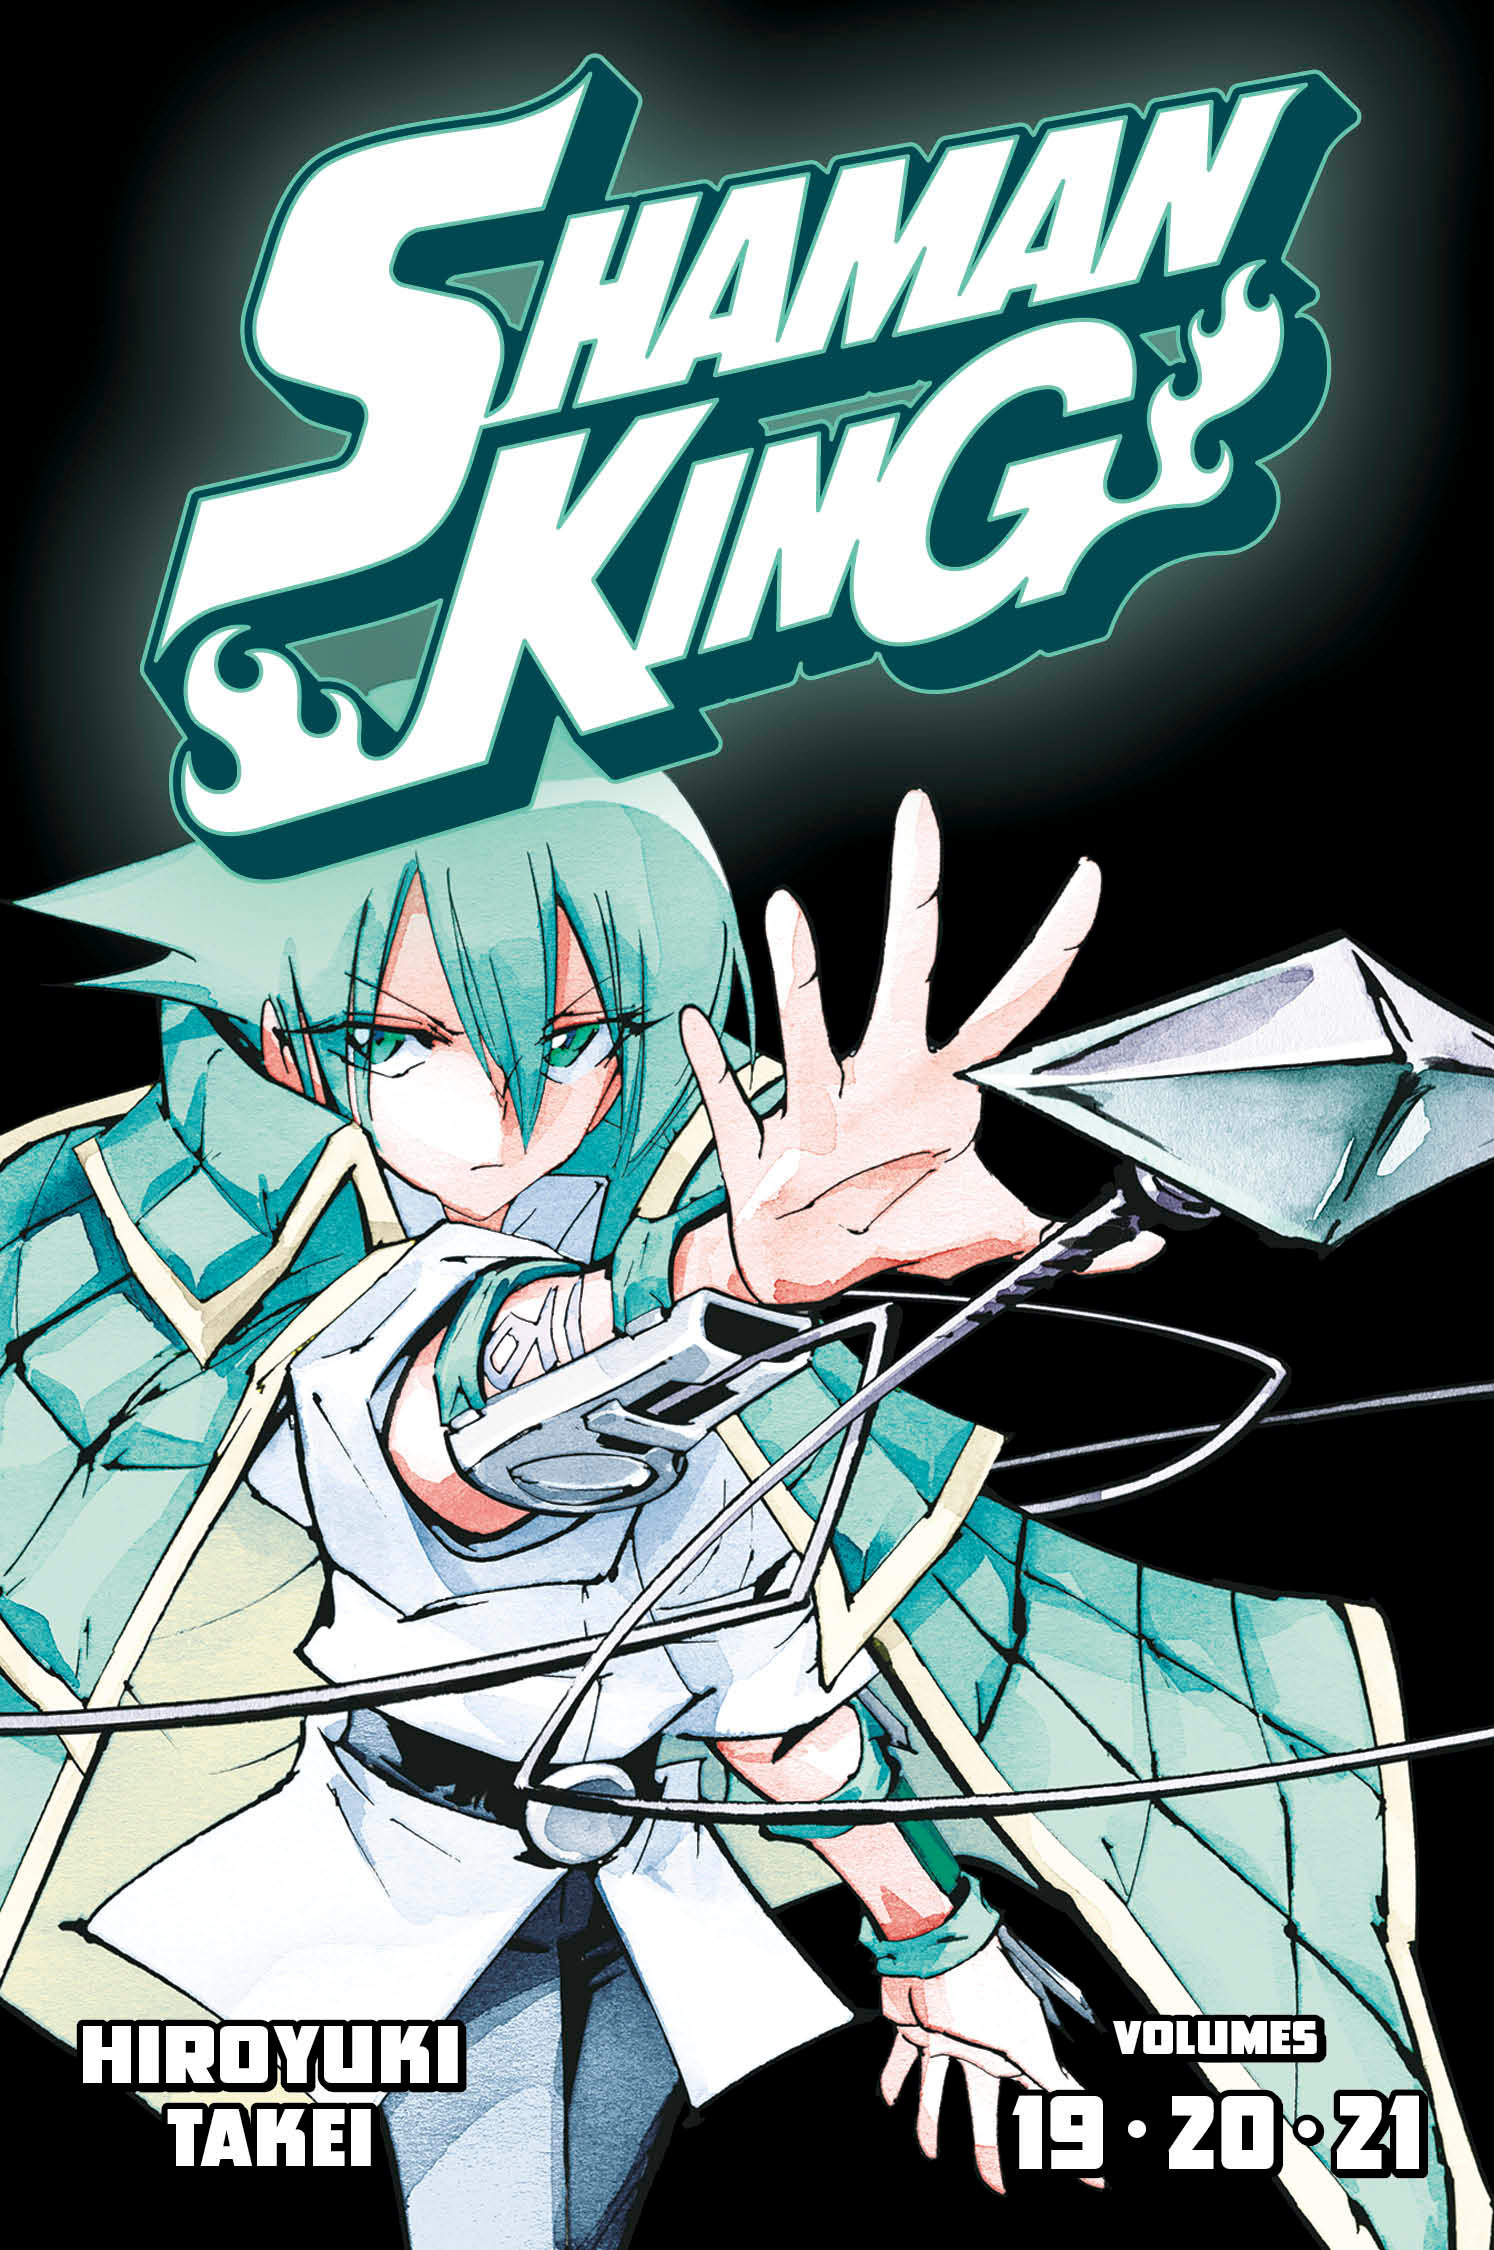 Shaman King Omnibus Manga Volume 7 (Vol 19-21)